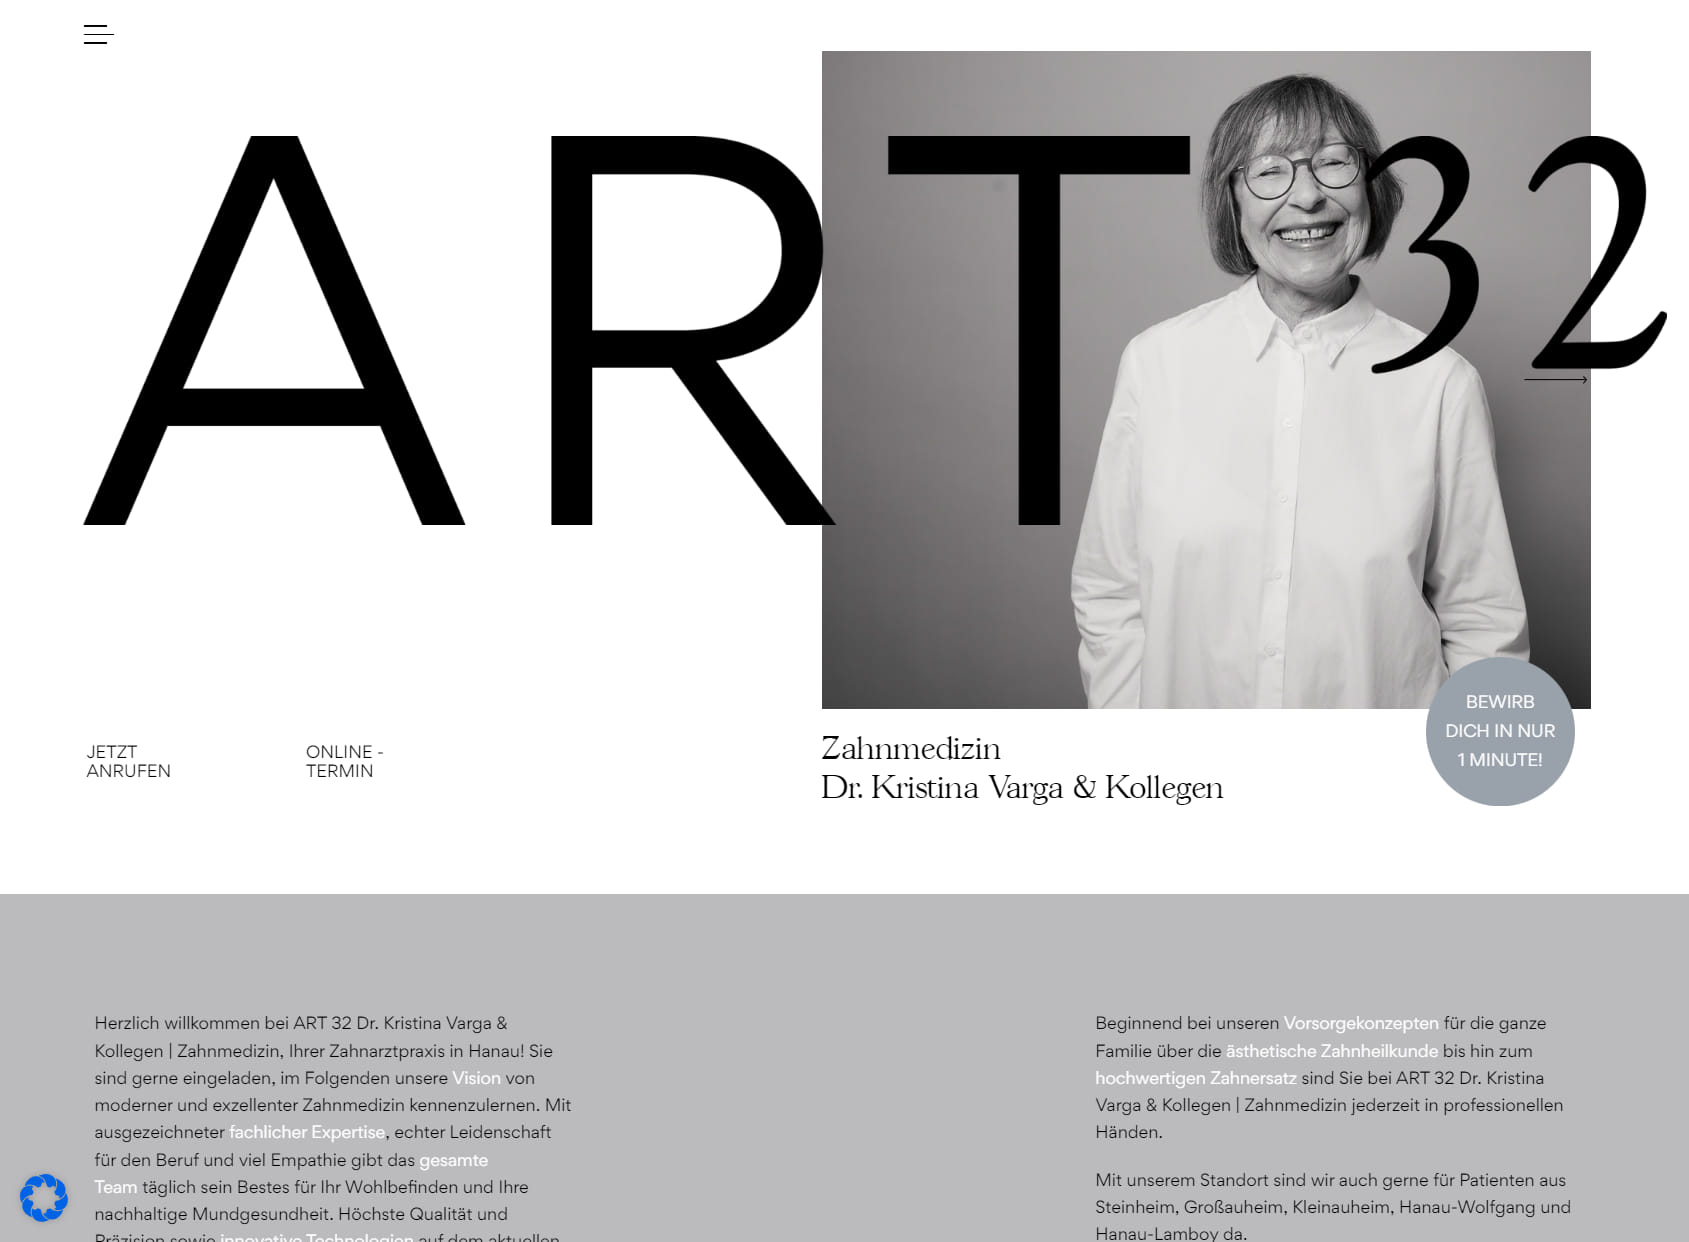 ART 32 Dr. Kristina Varga & Kollegen | Zahnmedizin